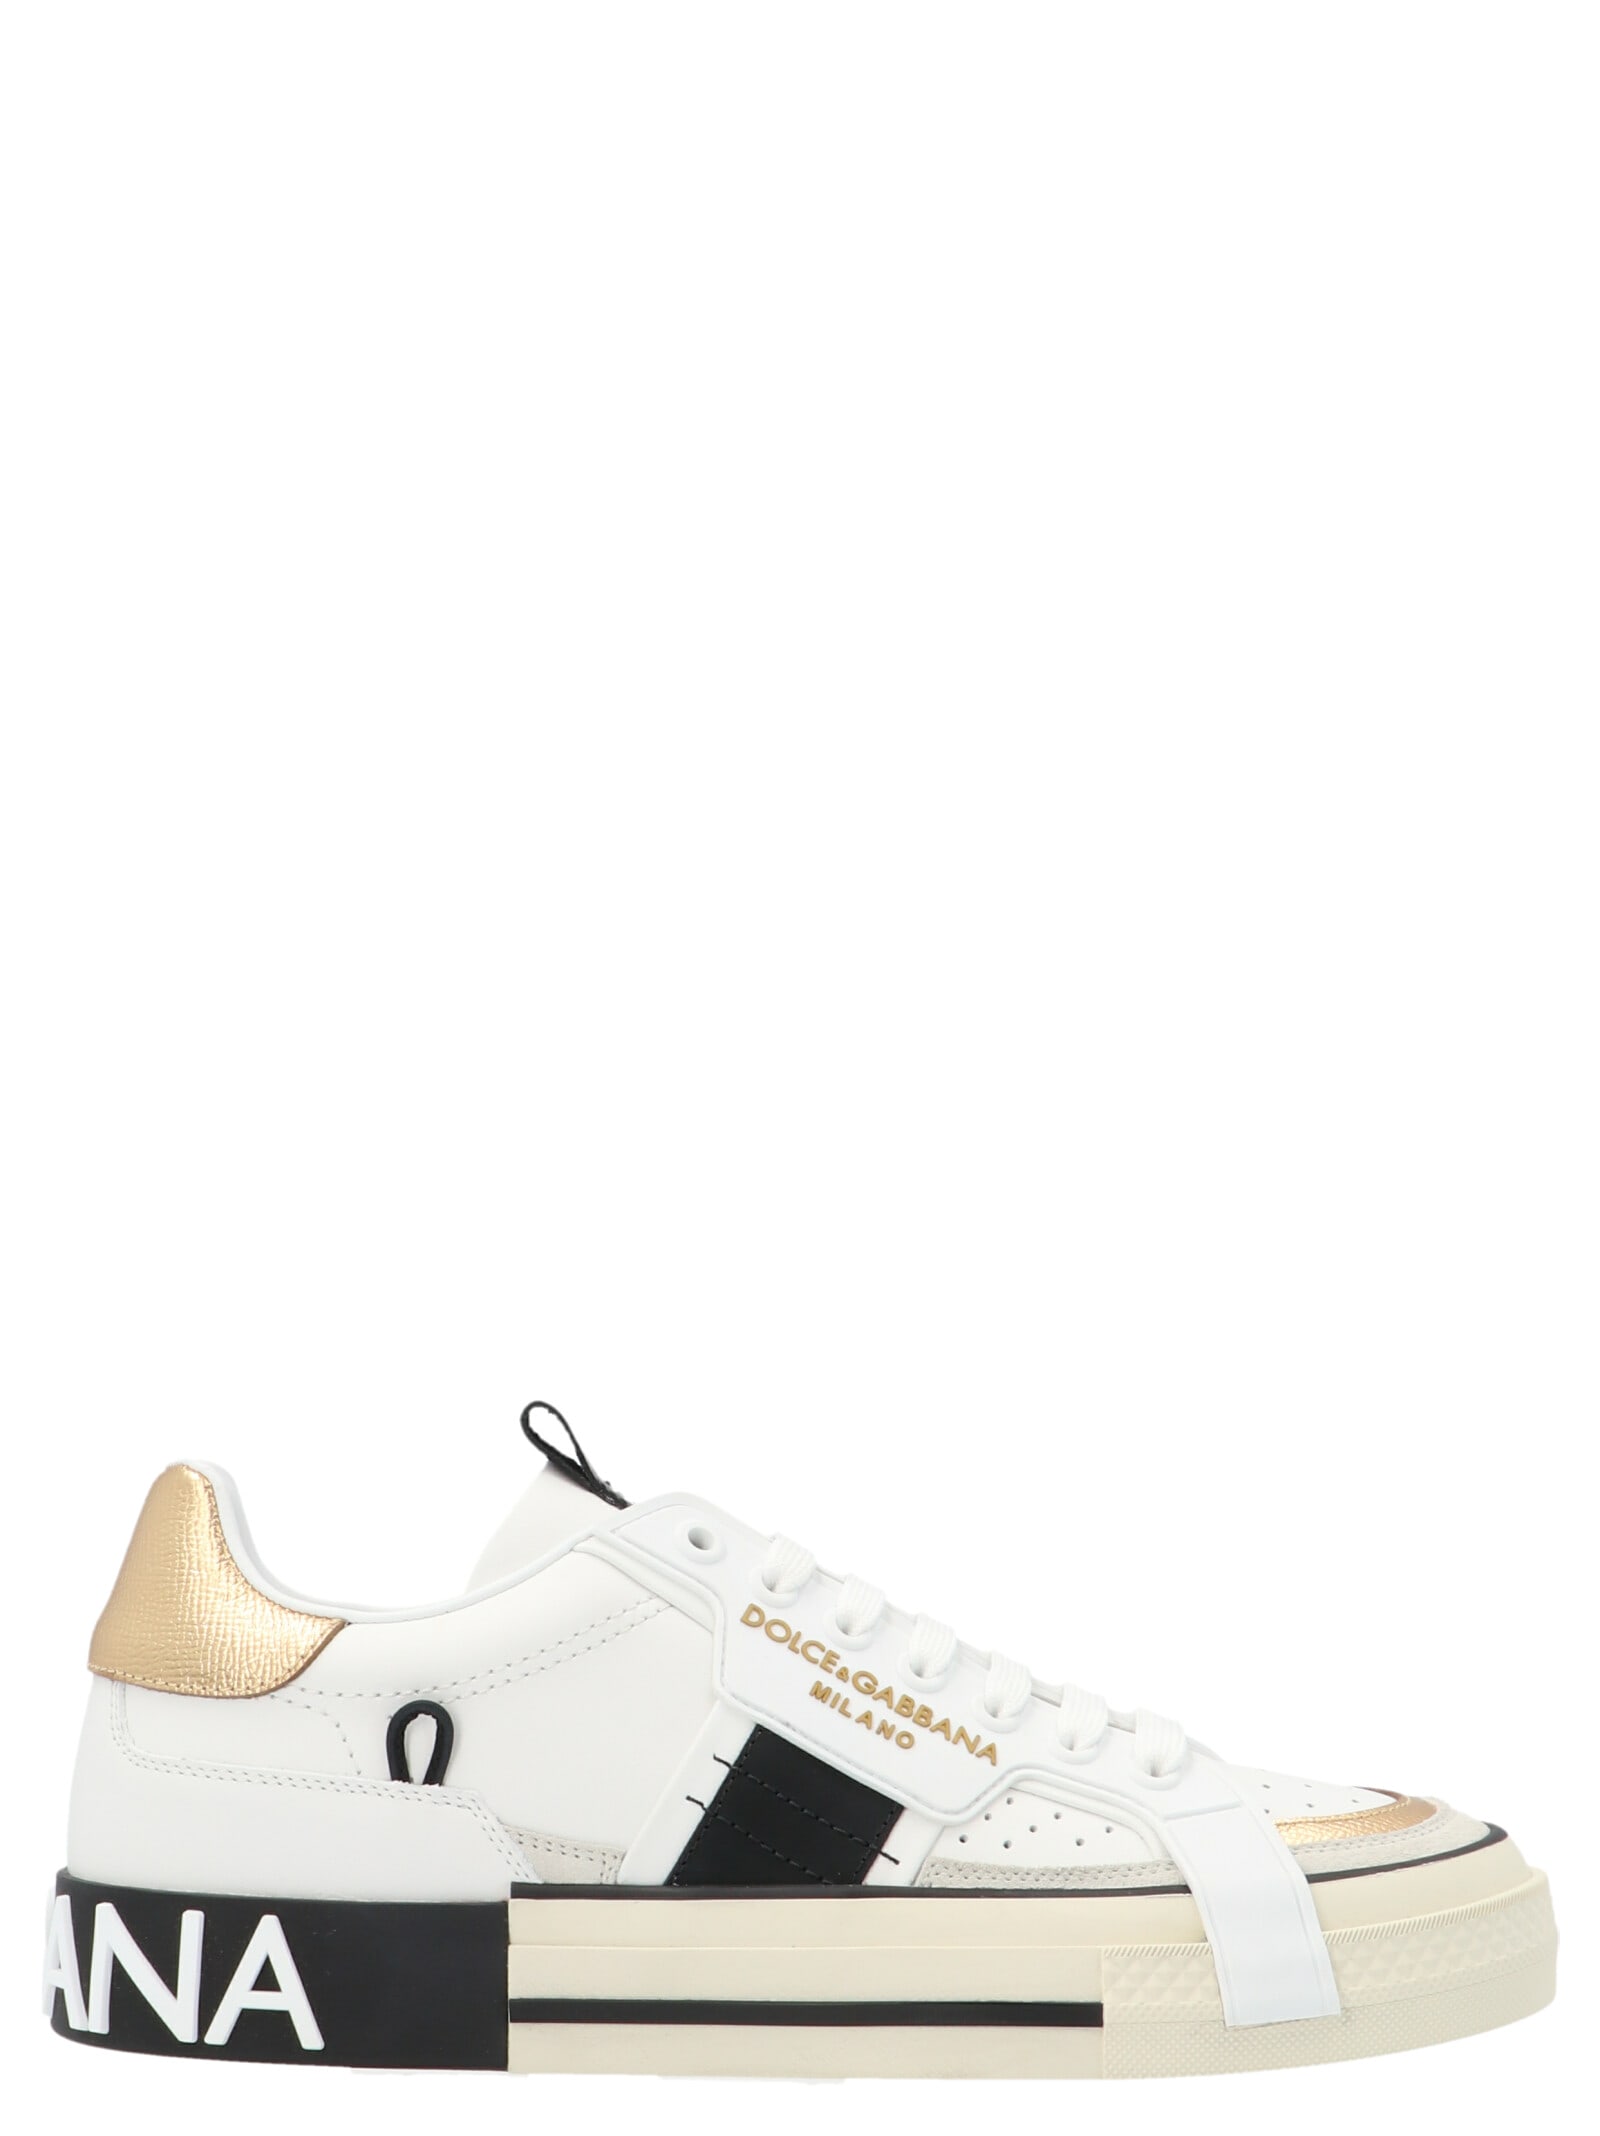 Dolce & Gabbana custom 2zero Shoes